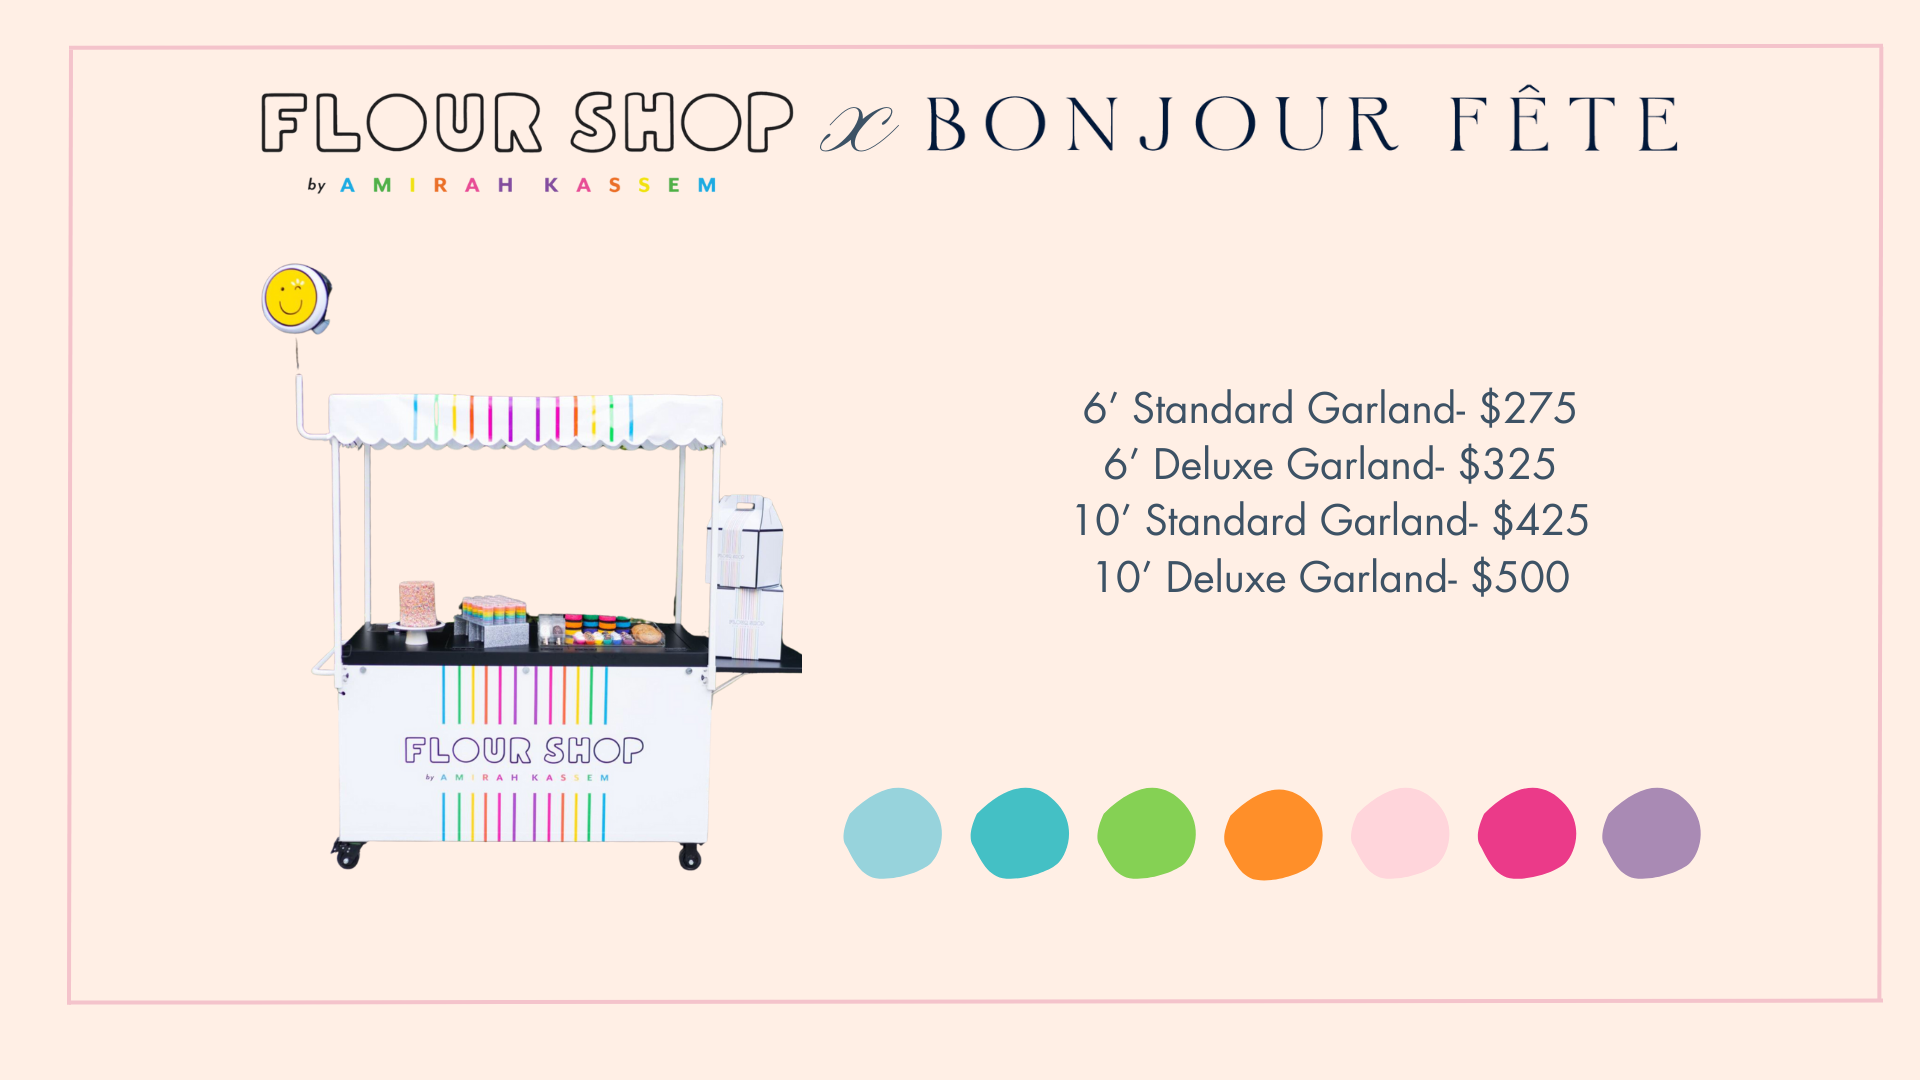 Bonjour Fête balloon garland pricing for the Flour Shop dessert cart.